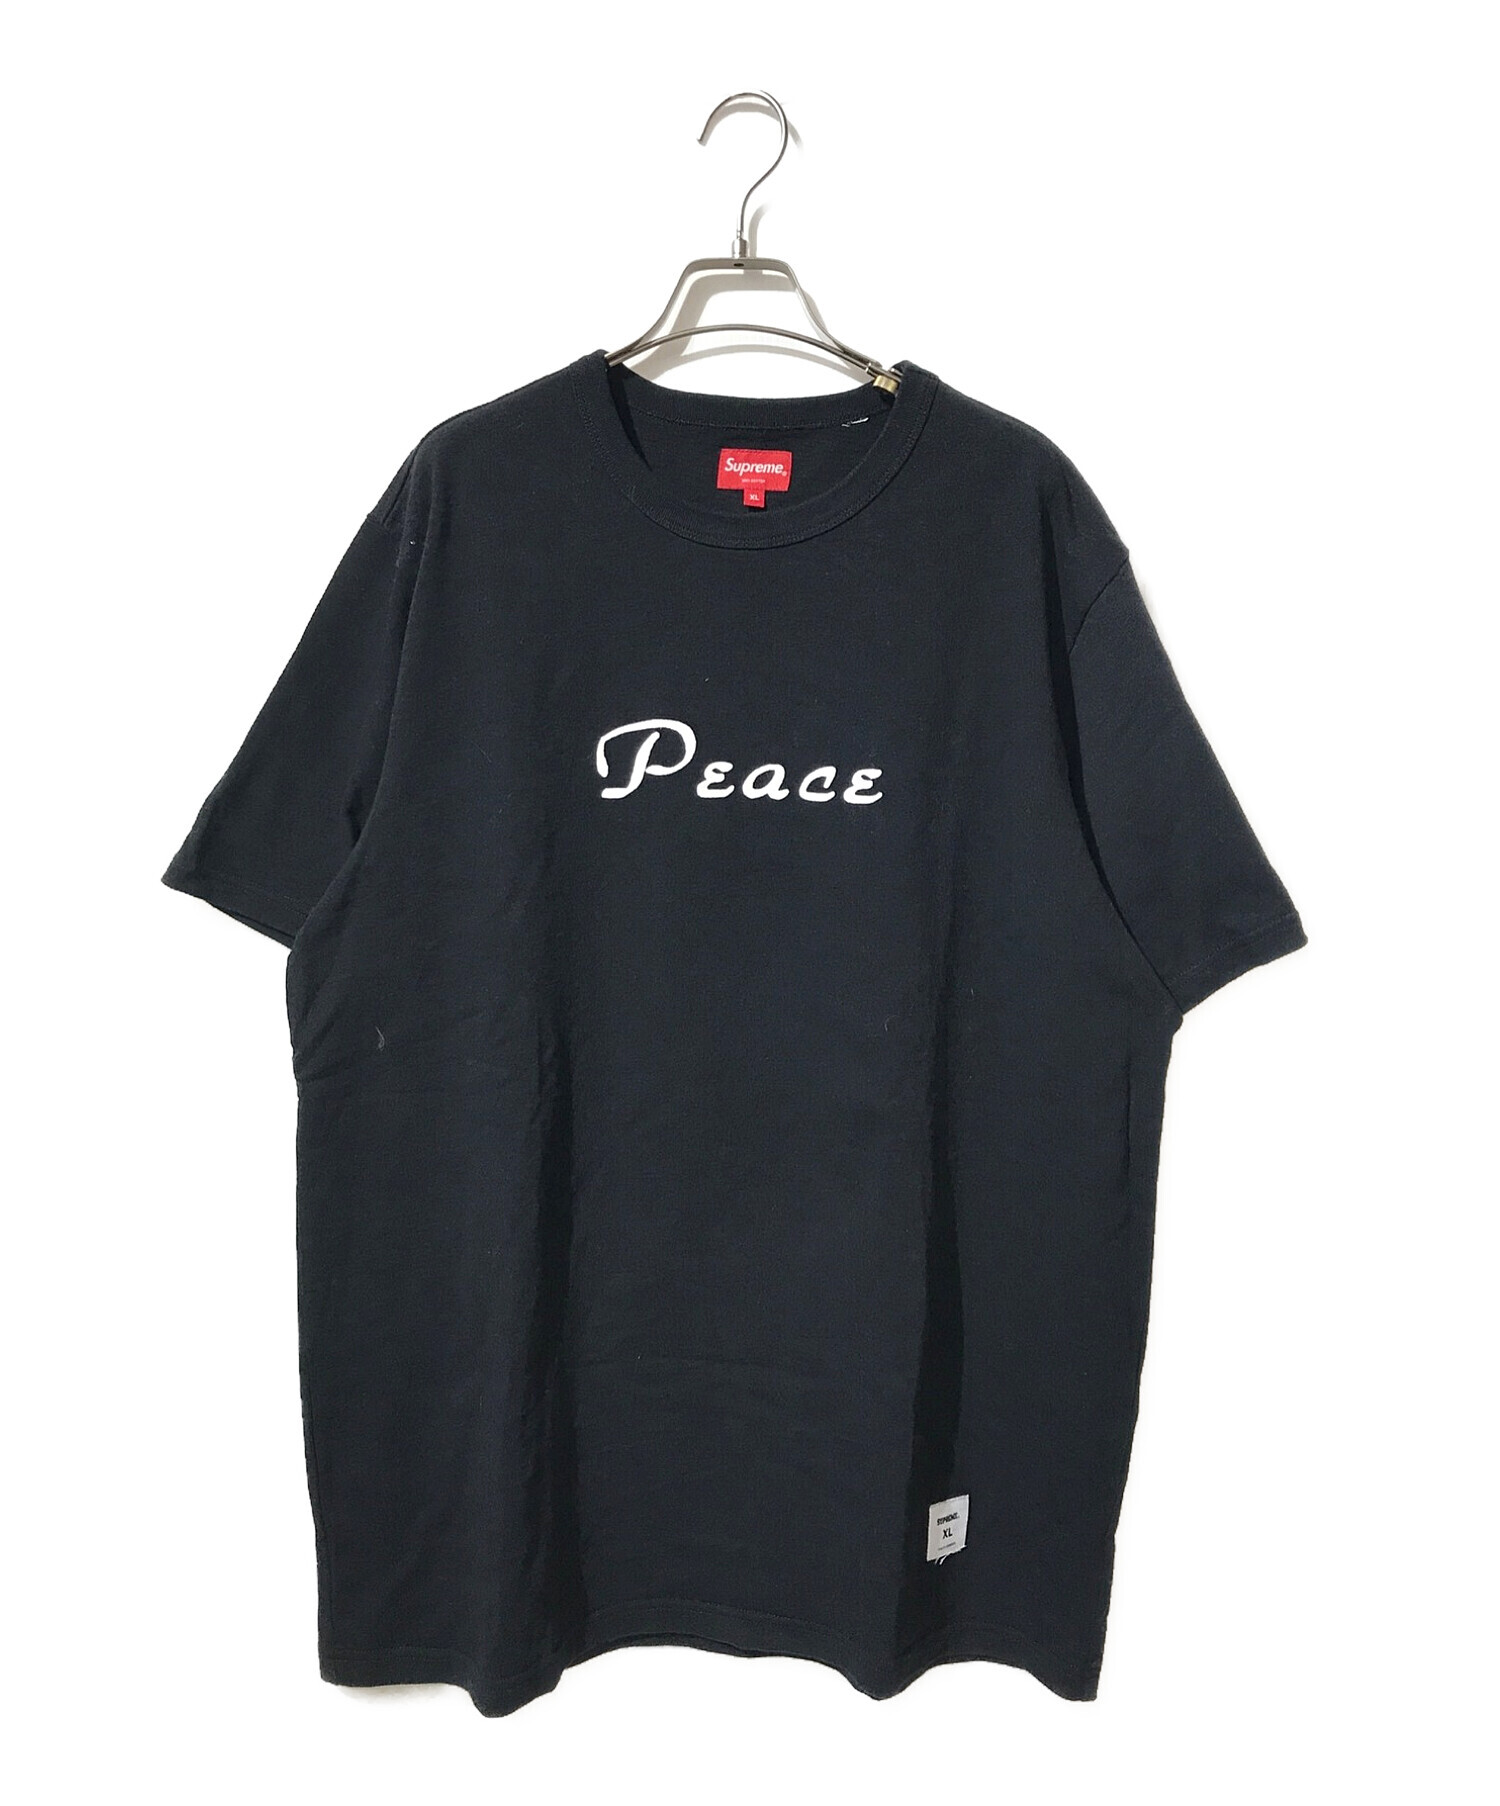 SUPREME (シュプリーム) Peace S/S Top/ピースショートスリーブトップ ブラック サイズ:XL